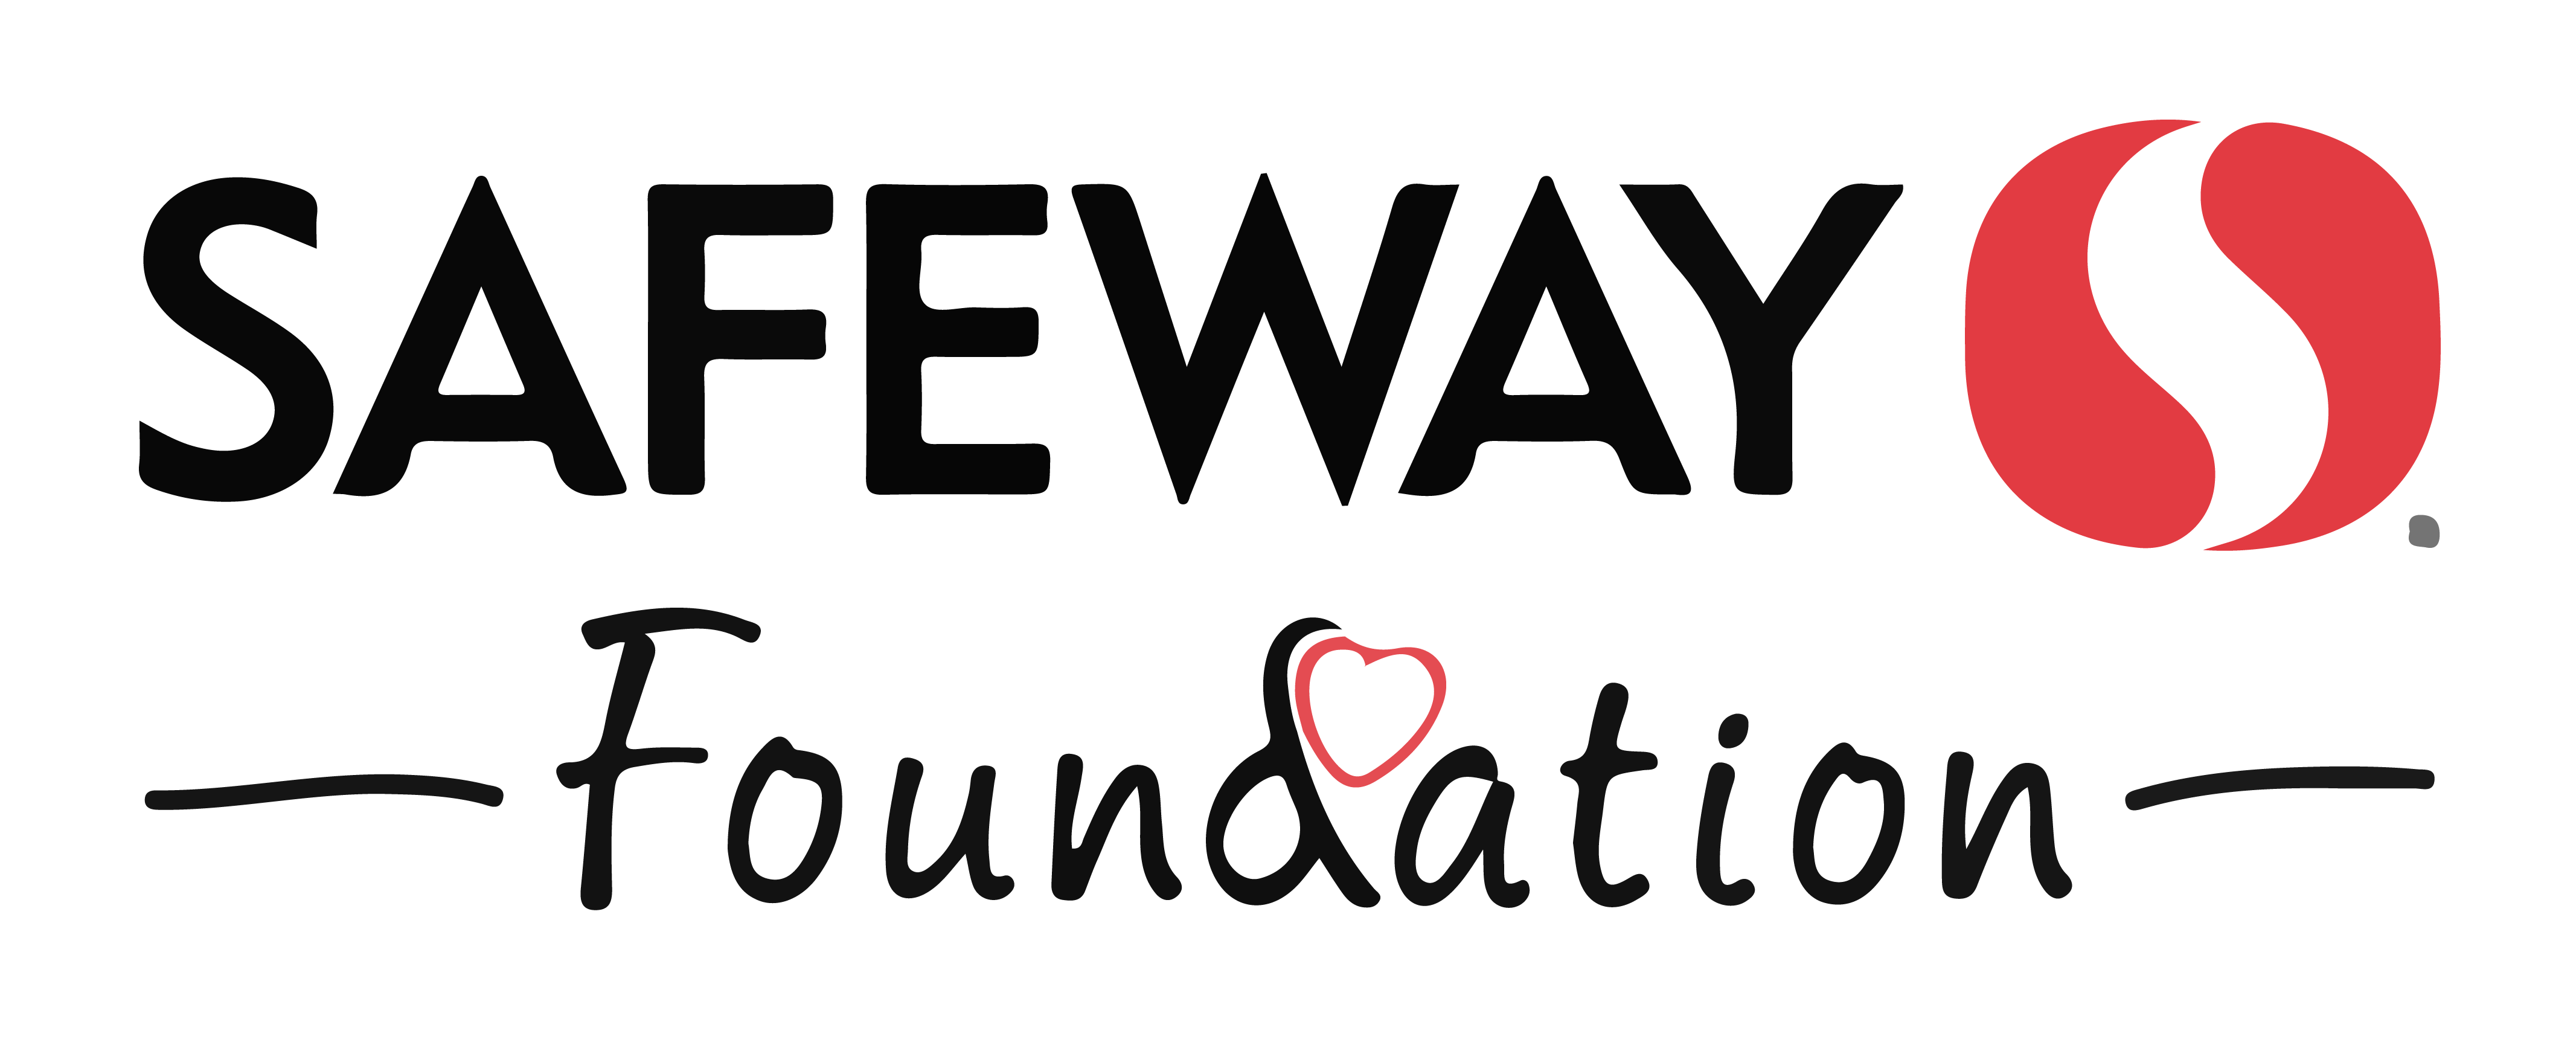 Safeway Foundation 